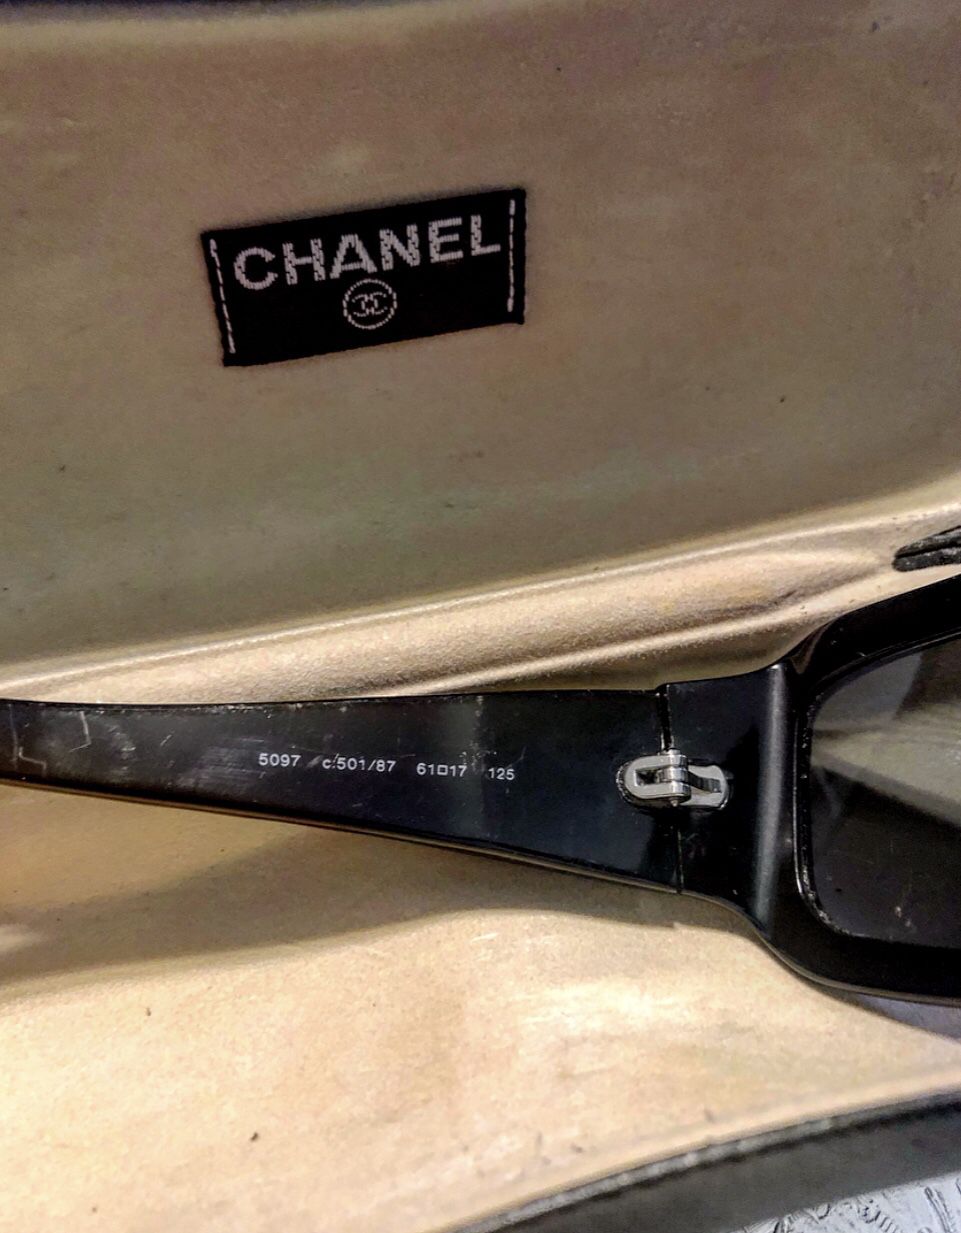 Chanel 5071 B666 13